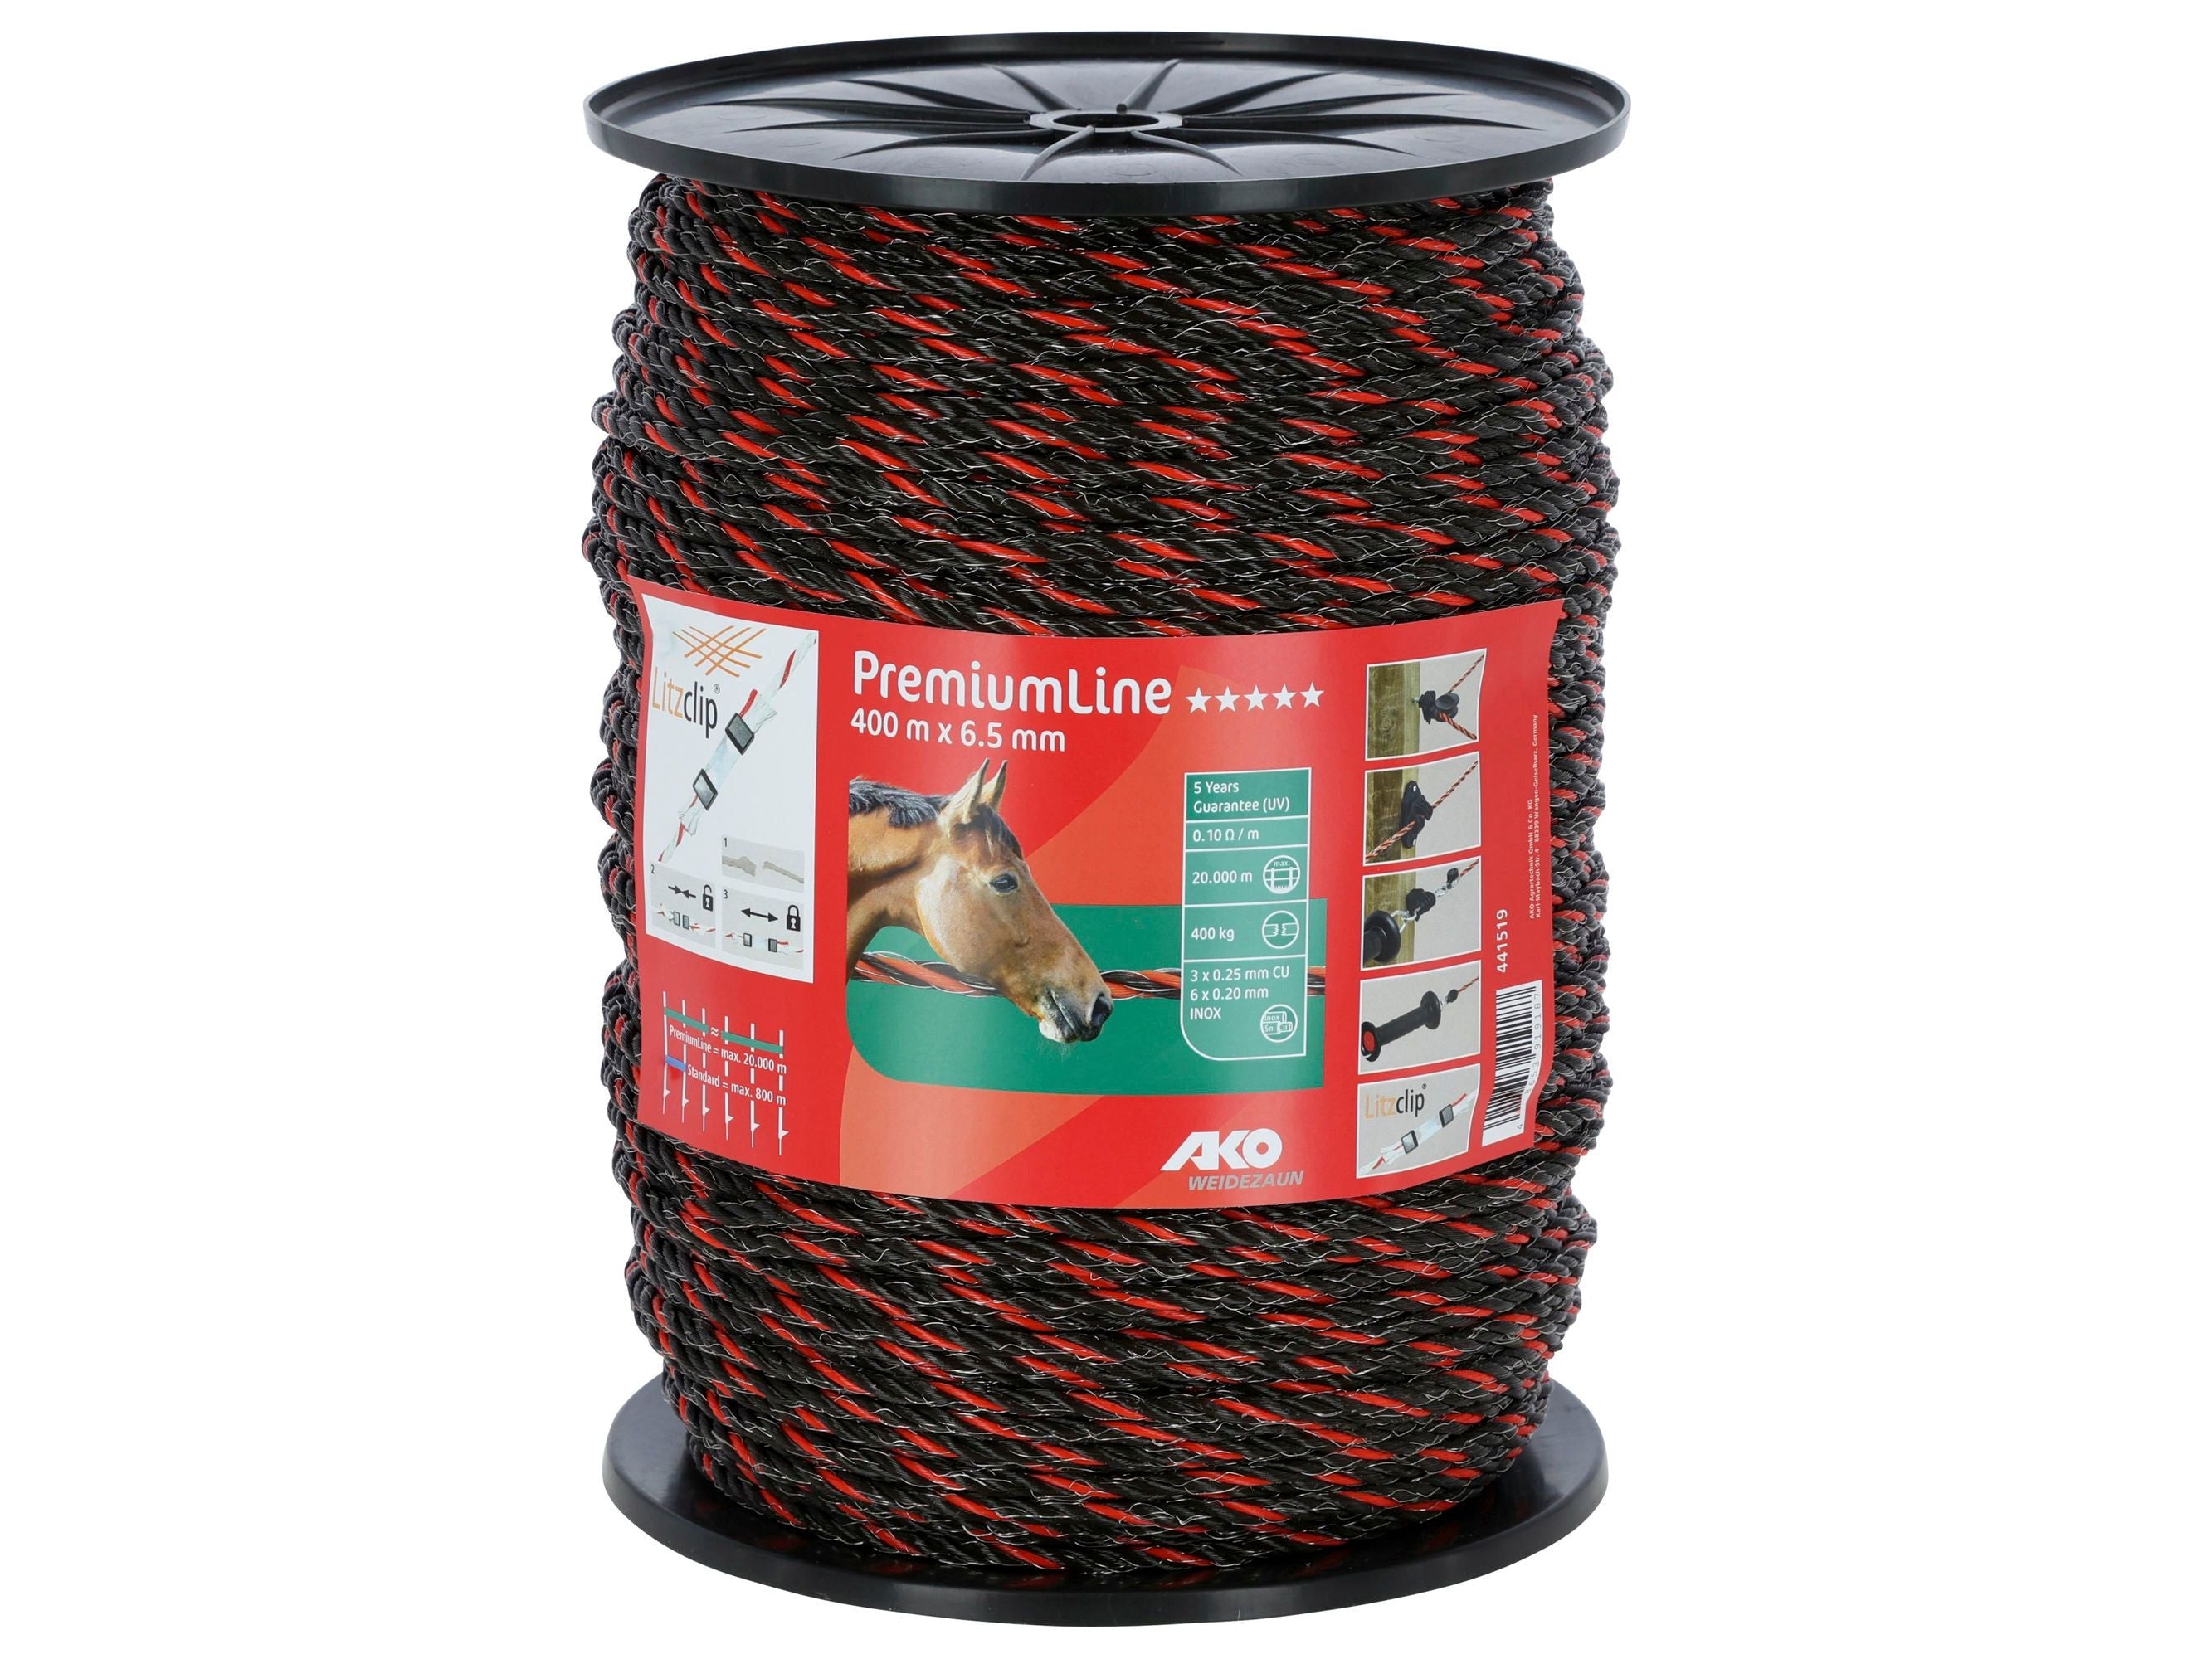 AKO Premium Line electric fence rope